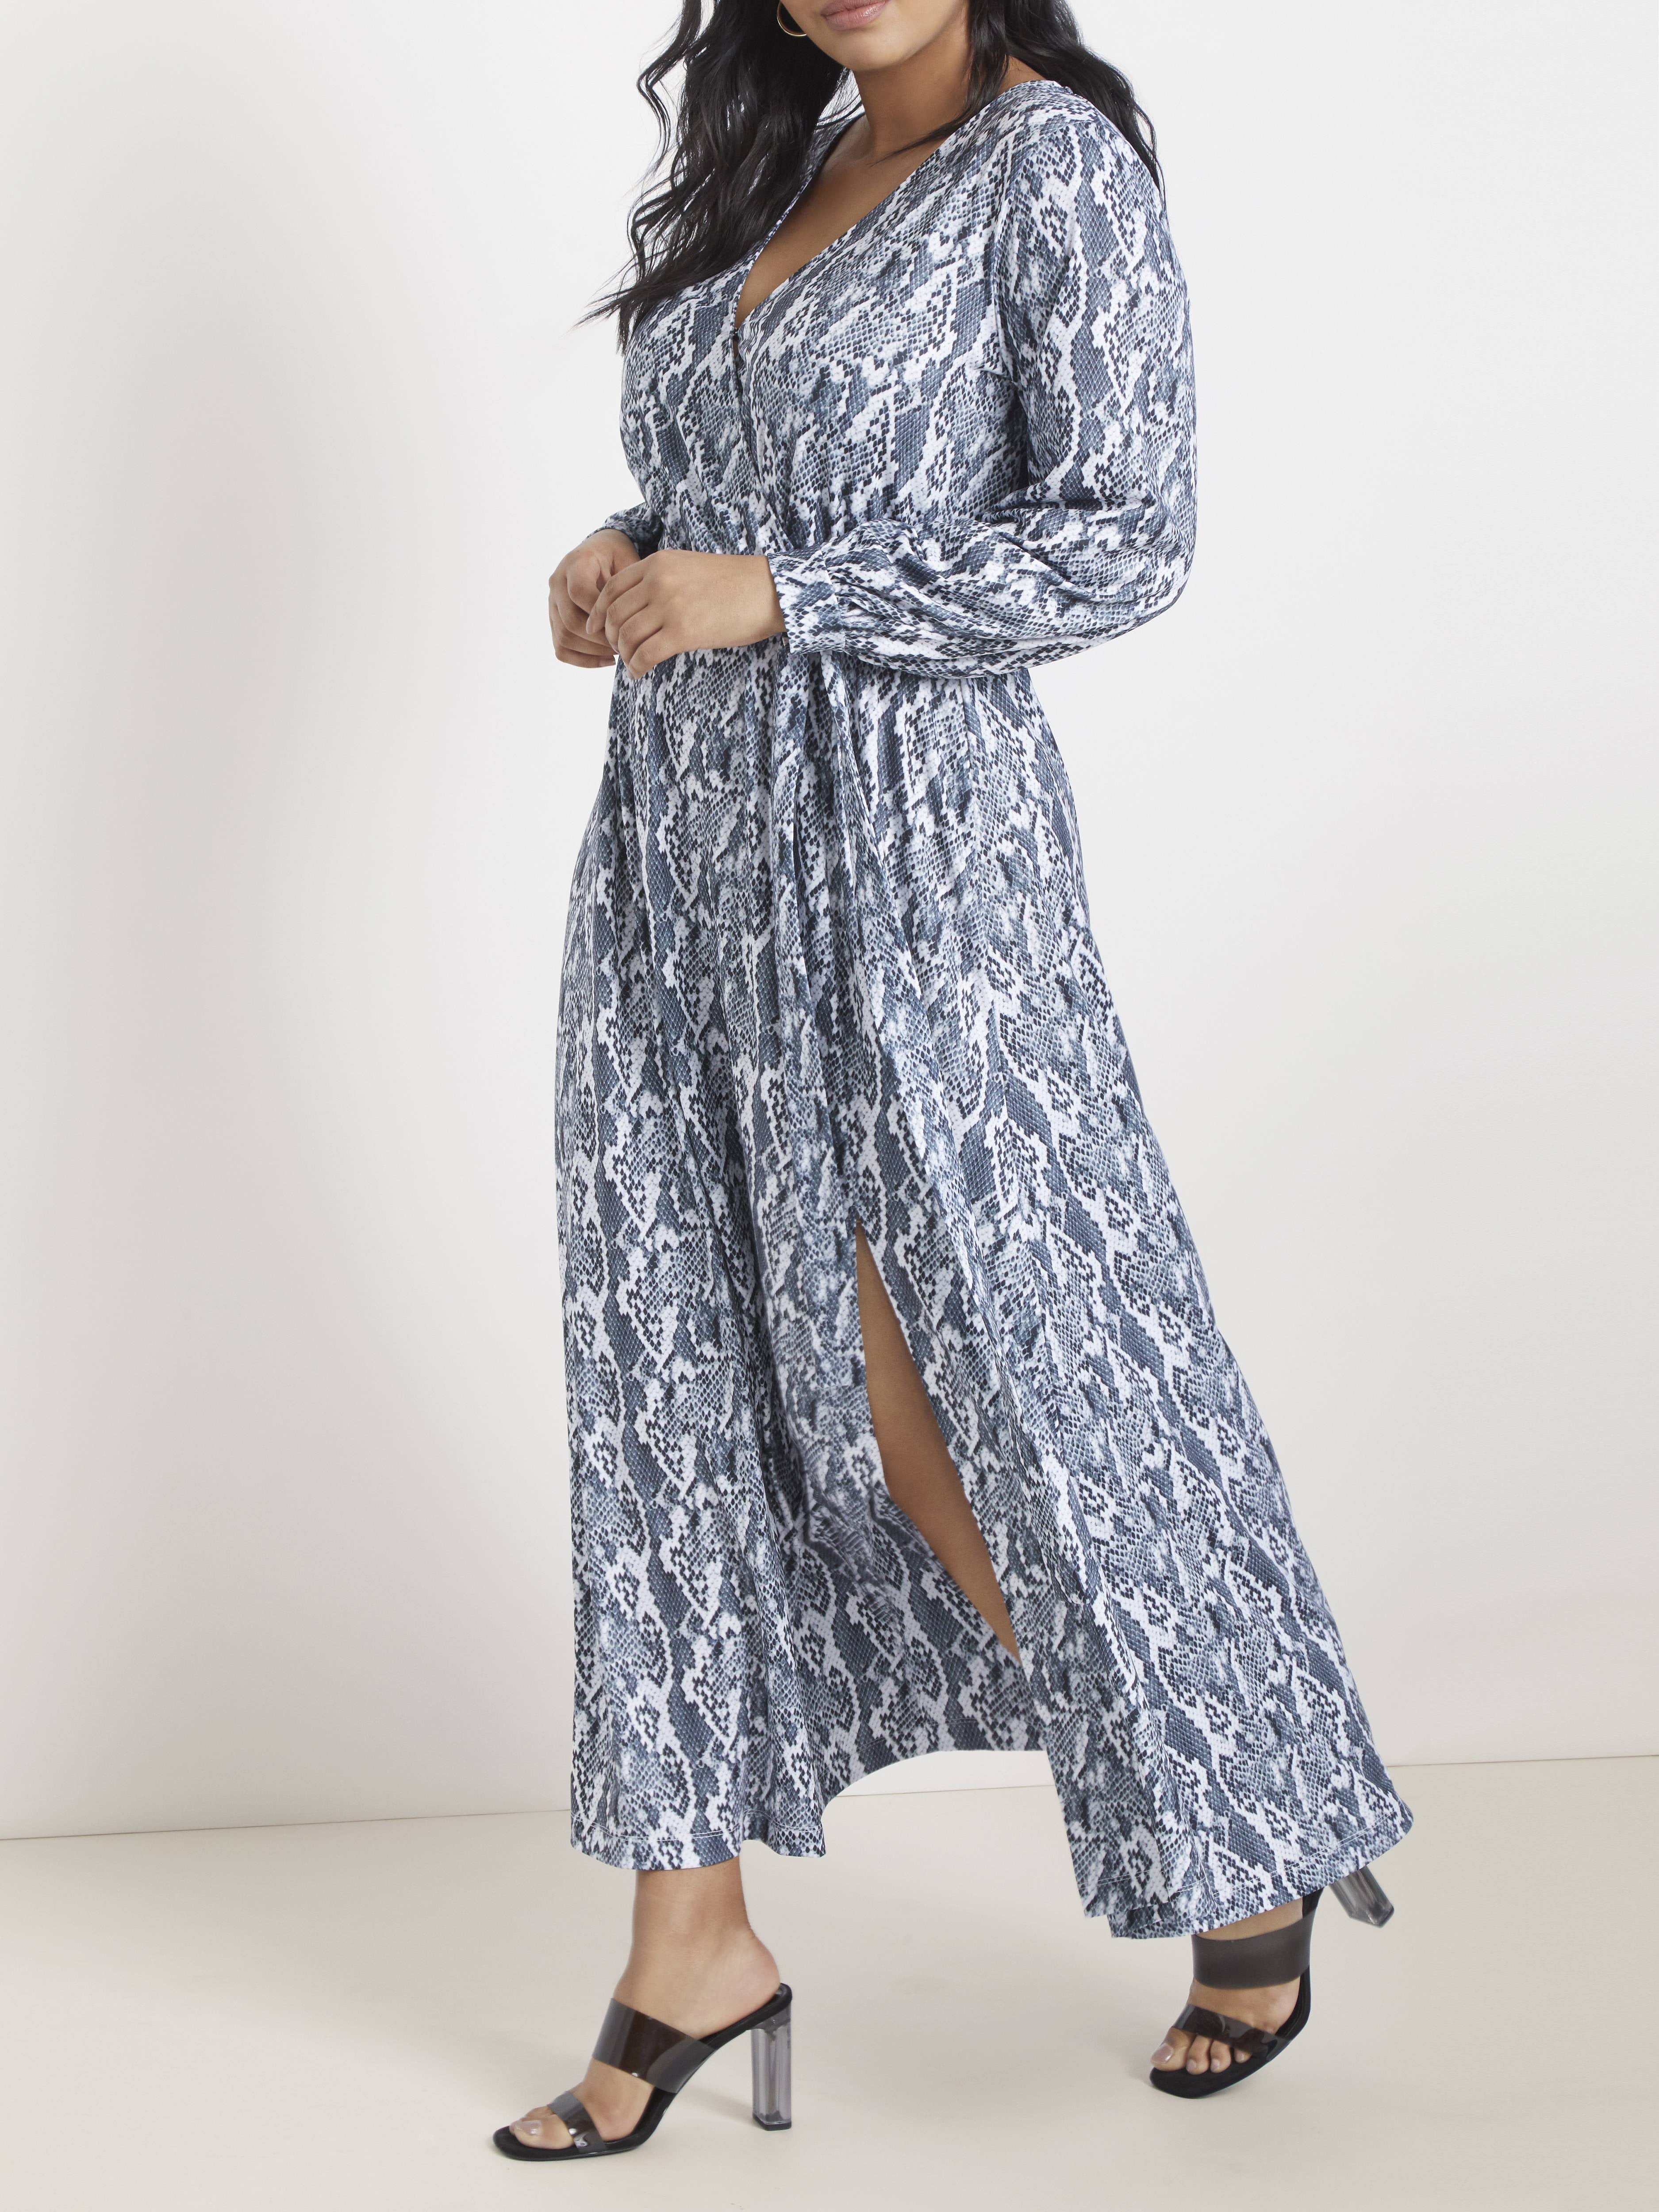 Eloquii Womens Plus Size Printed Maxi Dress 0839